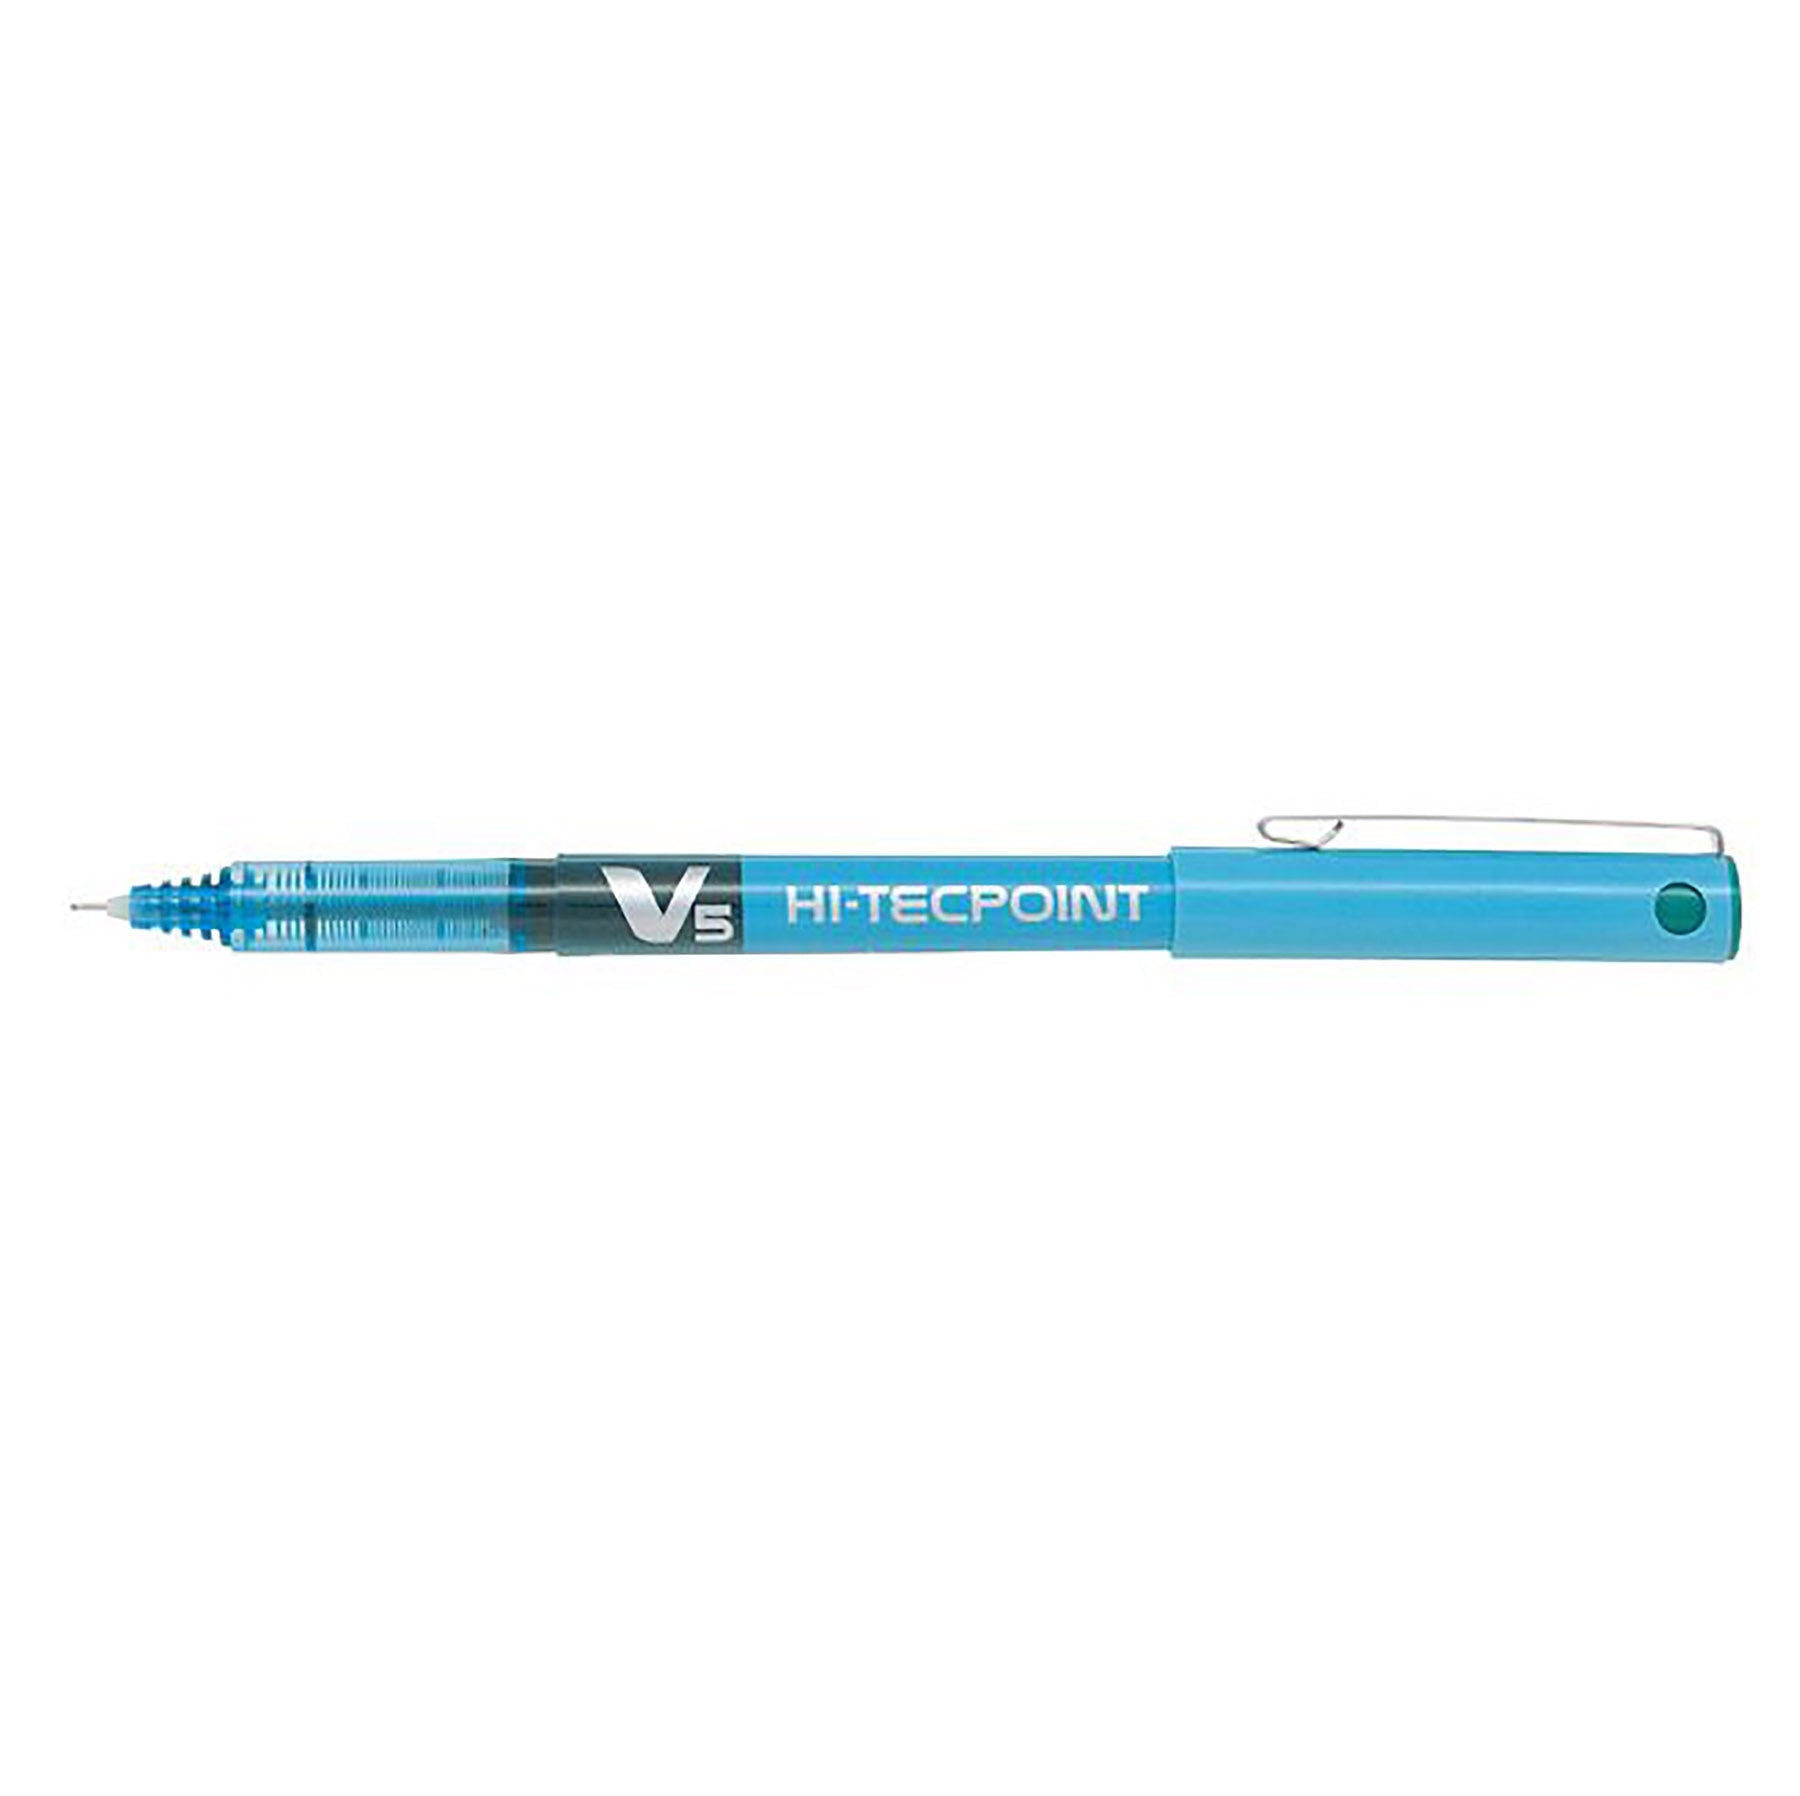 Pilot Hi-Tecpoint Pen with Cap - Turquoise Ink 0.5mm